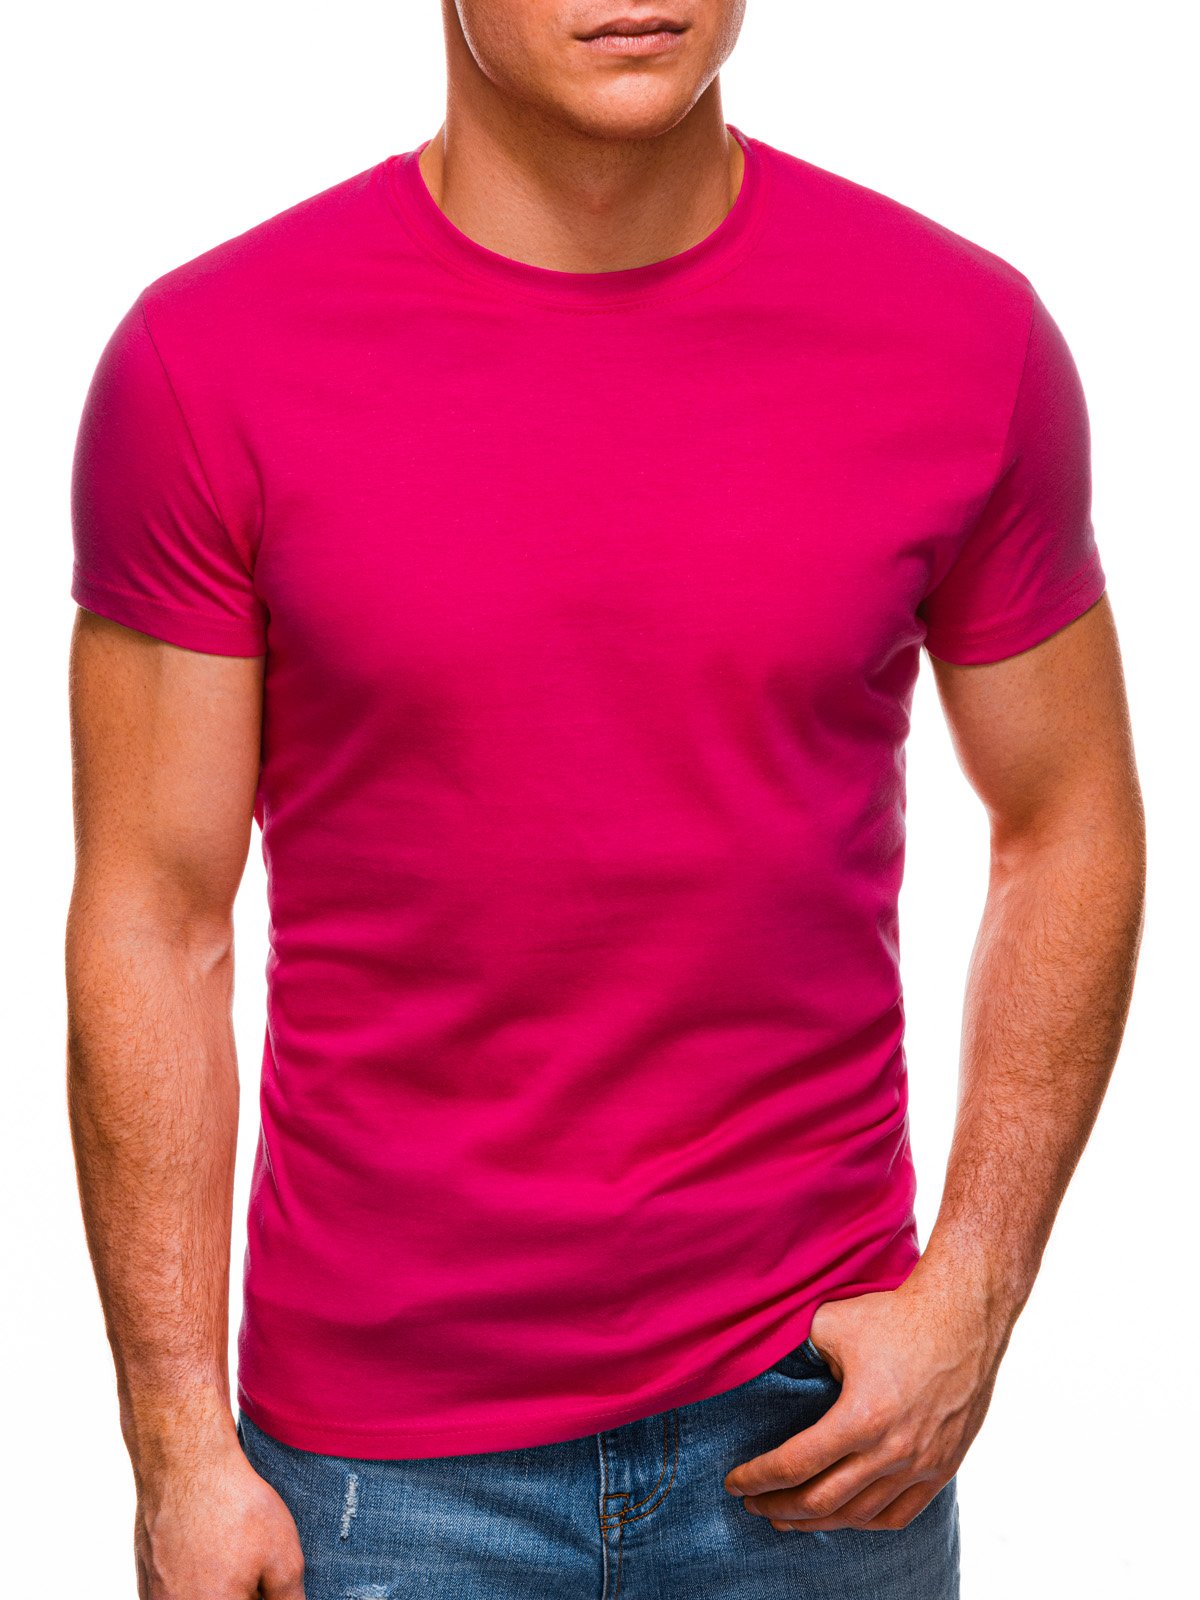 Men's plain t-shirt S970 - dark pink